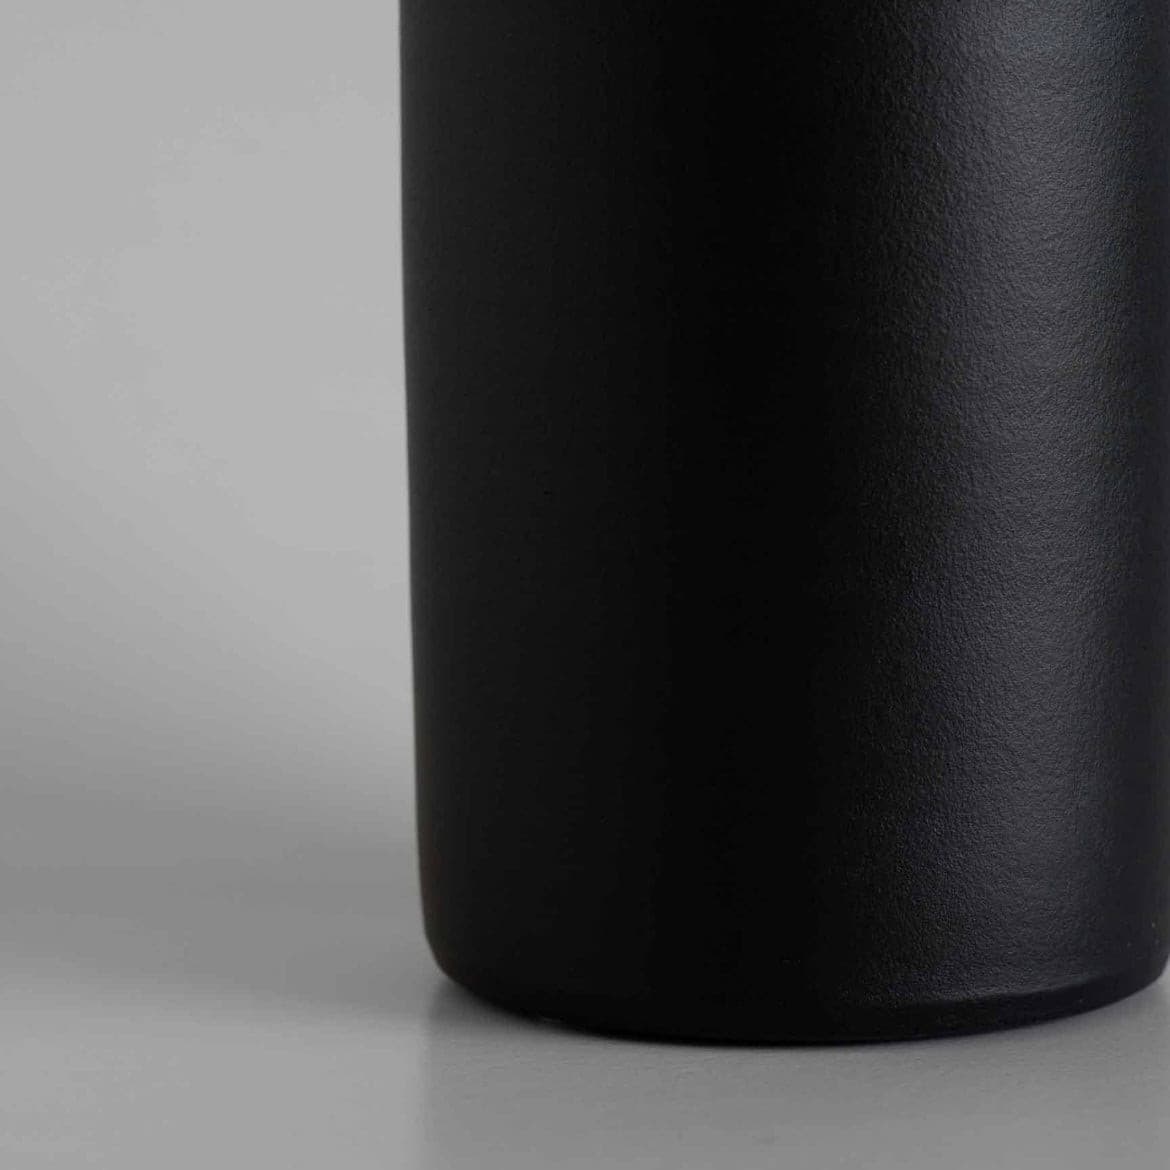 Black Simple Vase